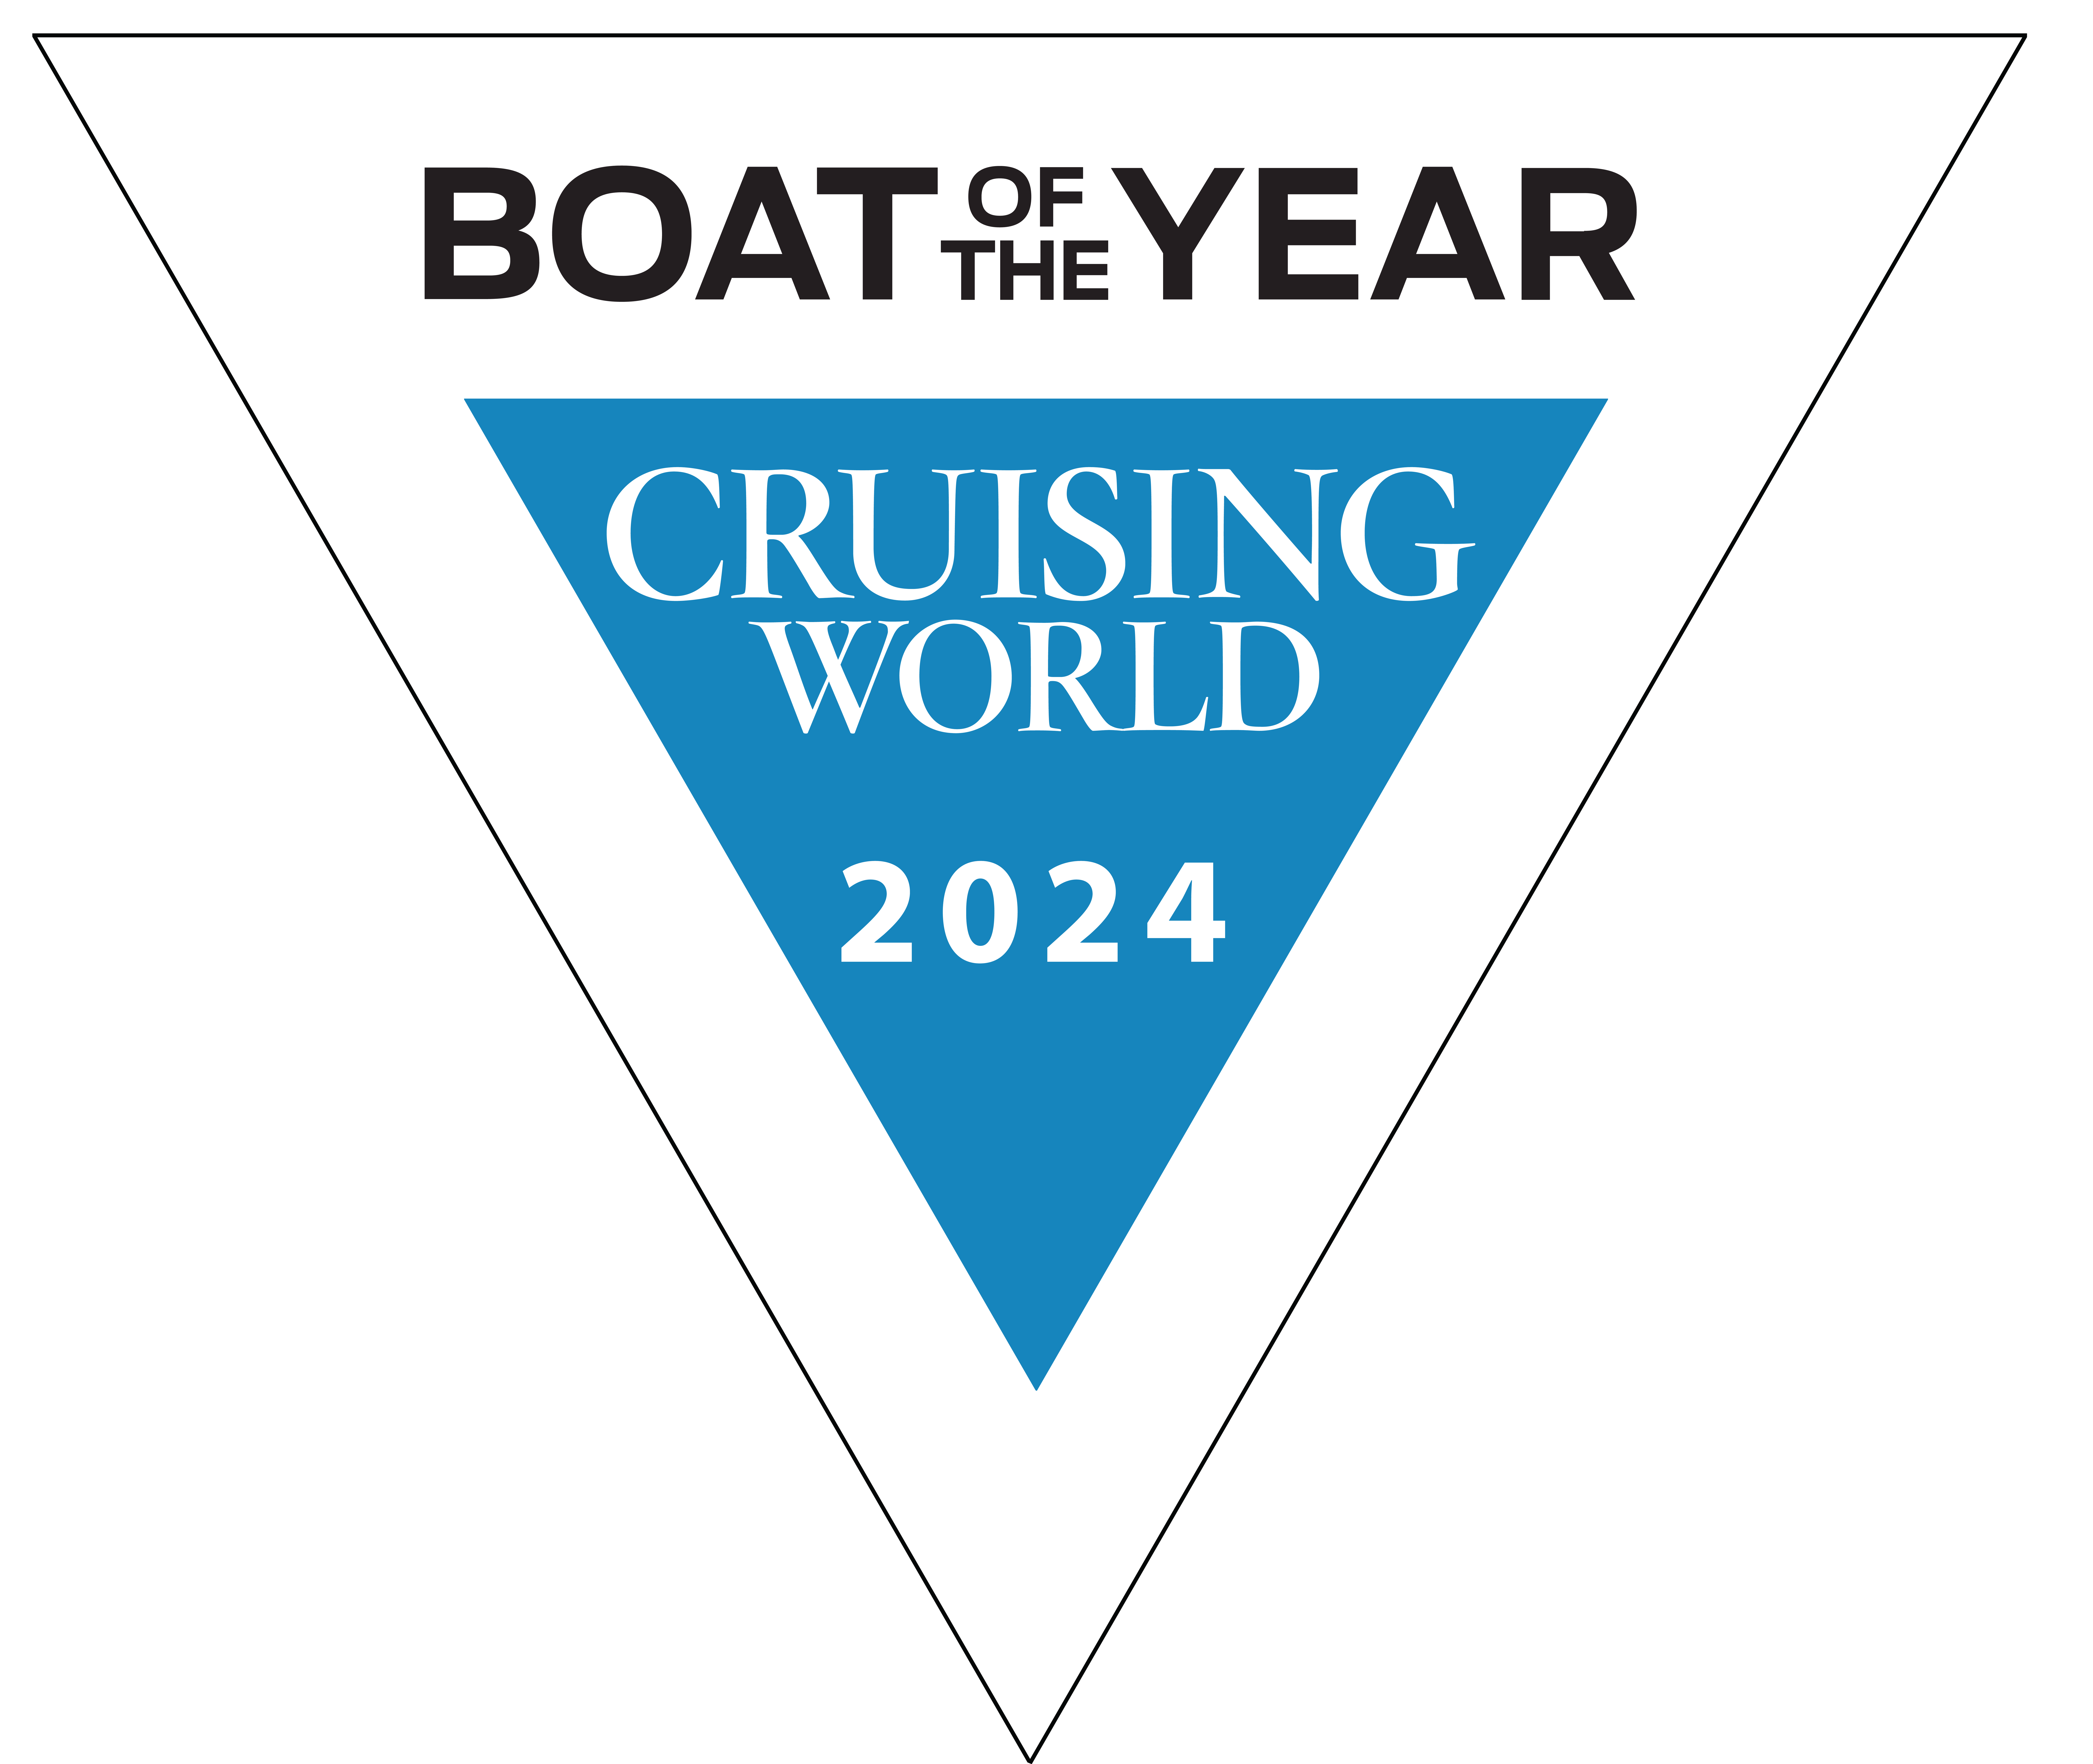 Cruising World 2024 Boat of the Year Logo